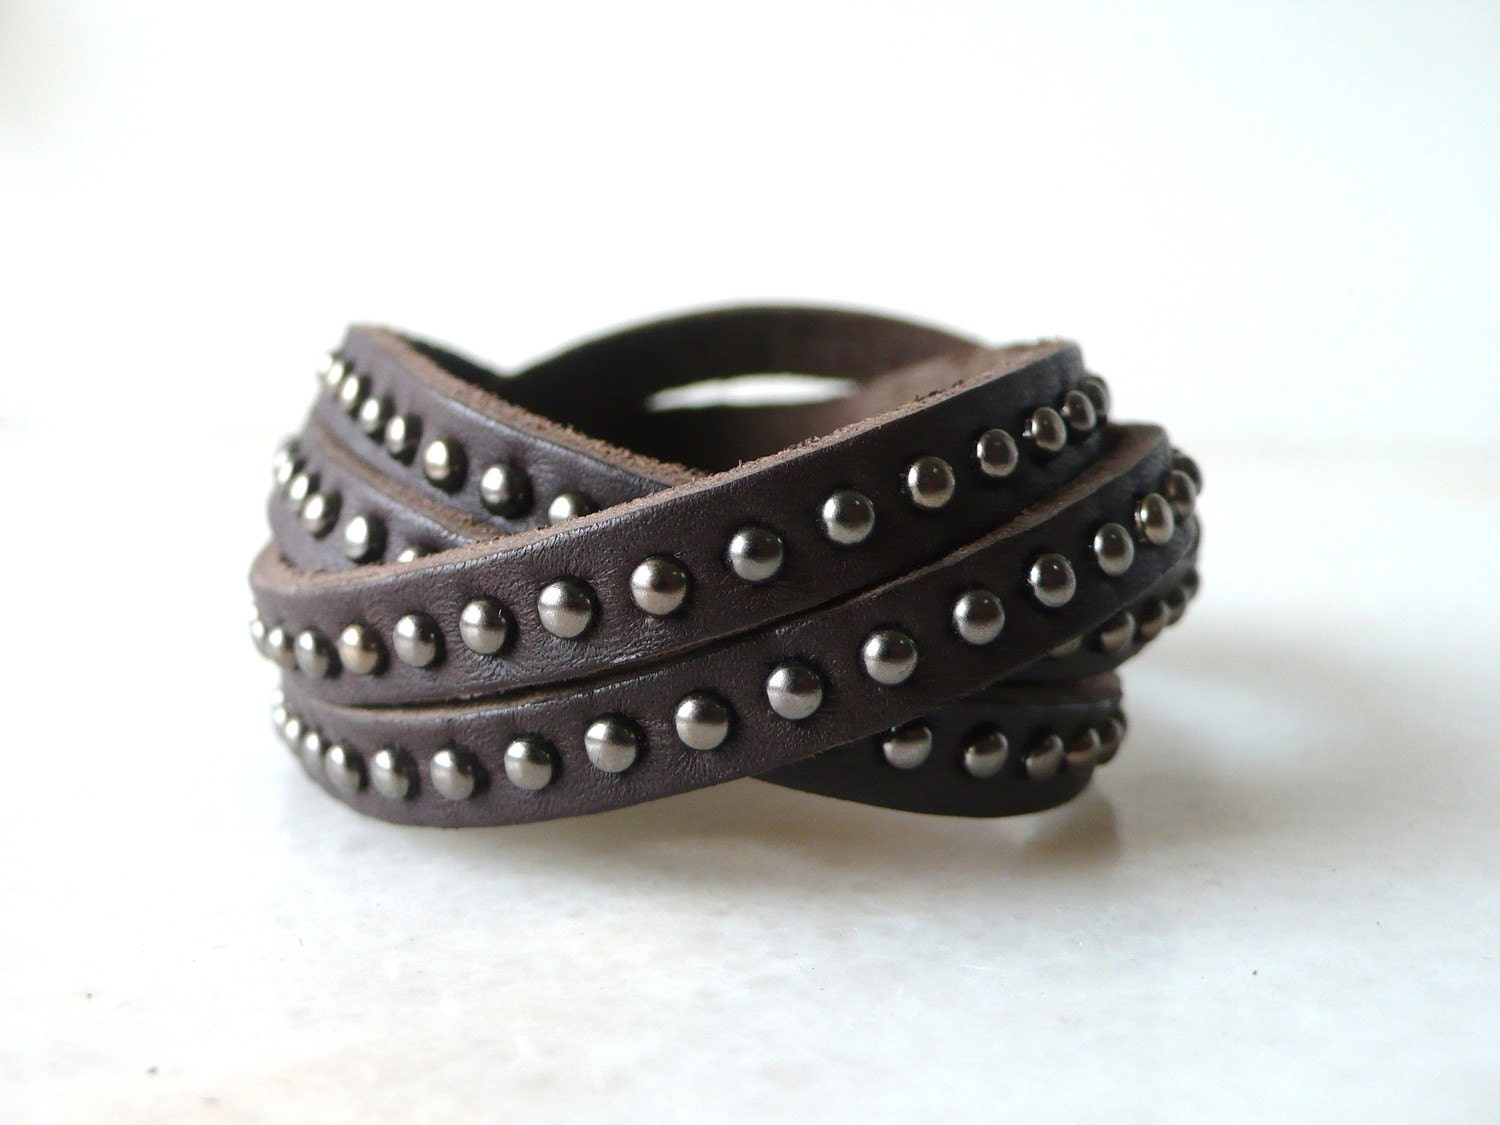 Dark brown cowhide wrapped leather bracelet with brown metal rivets